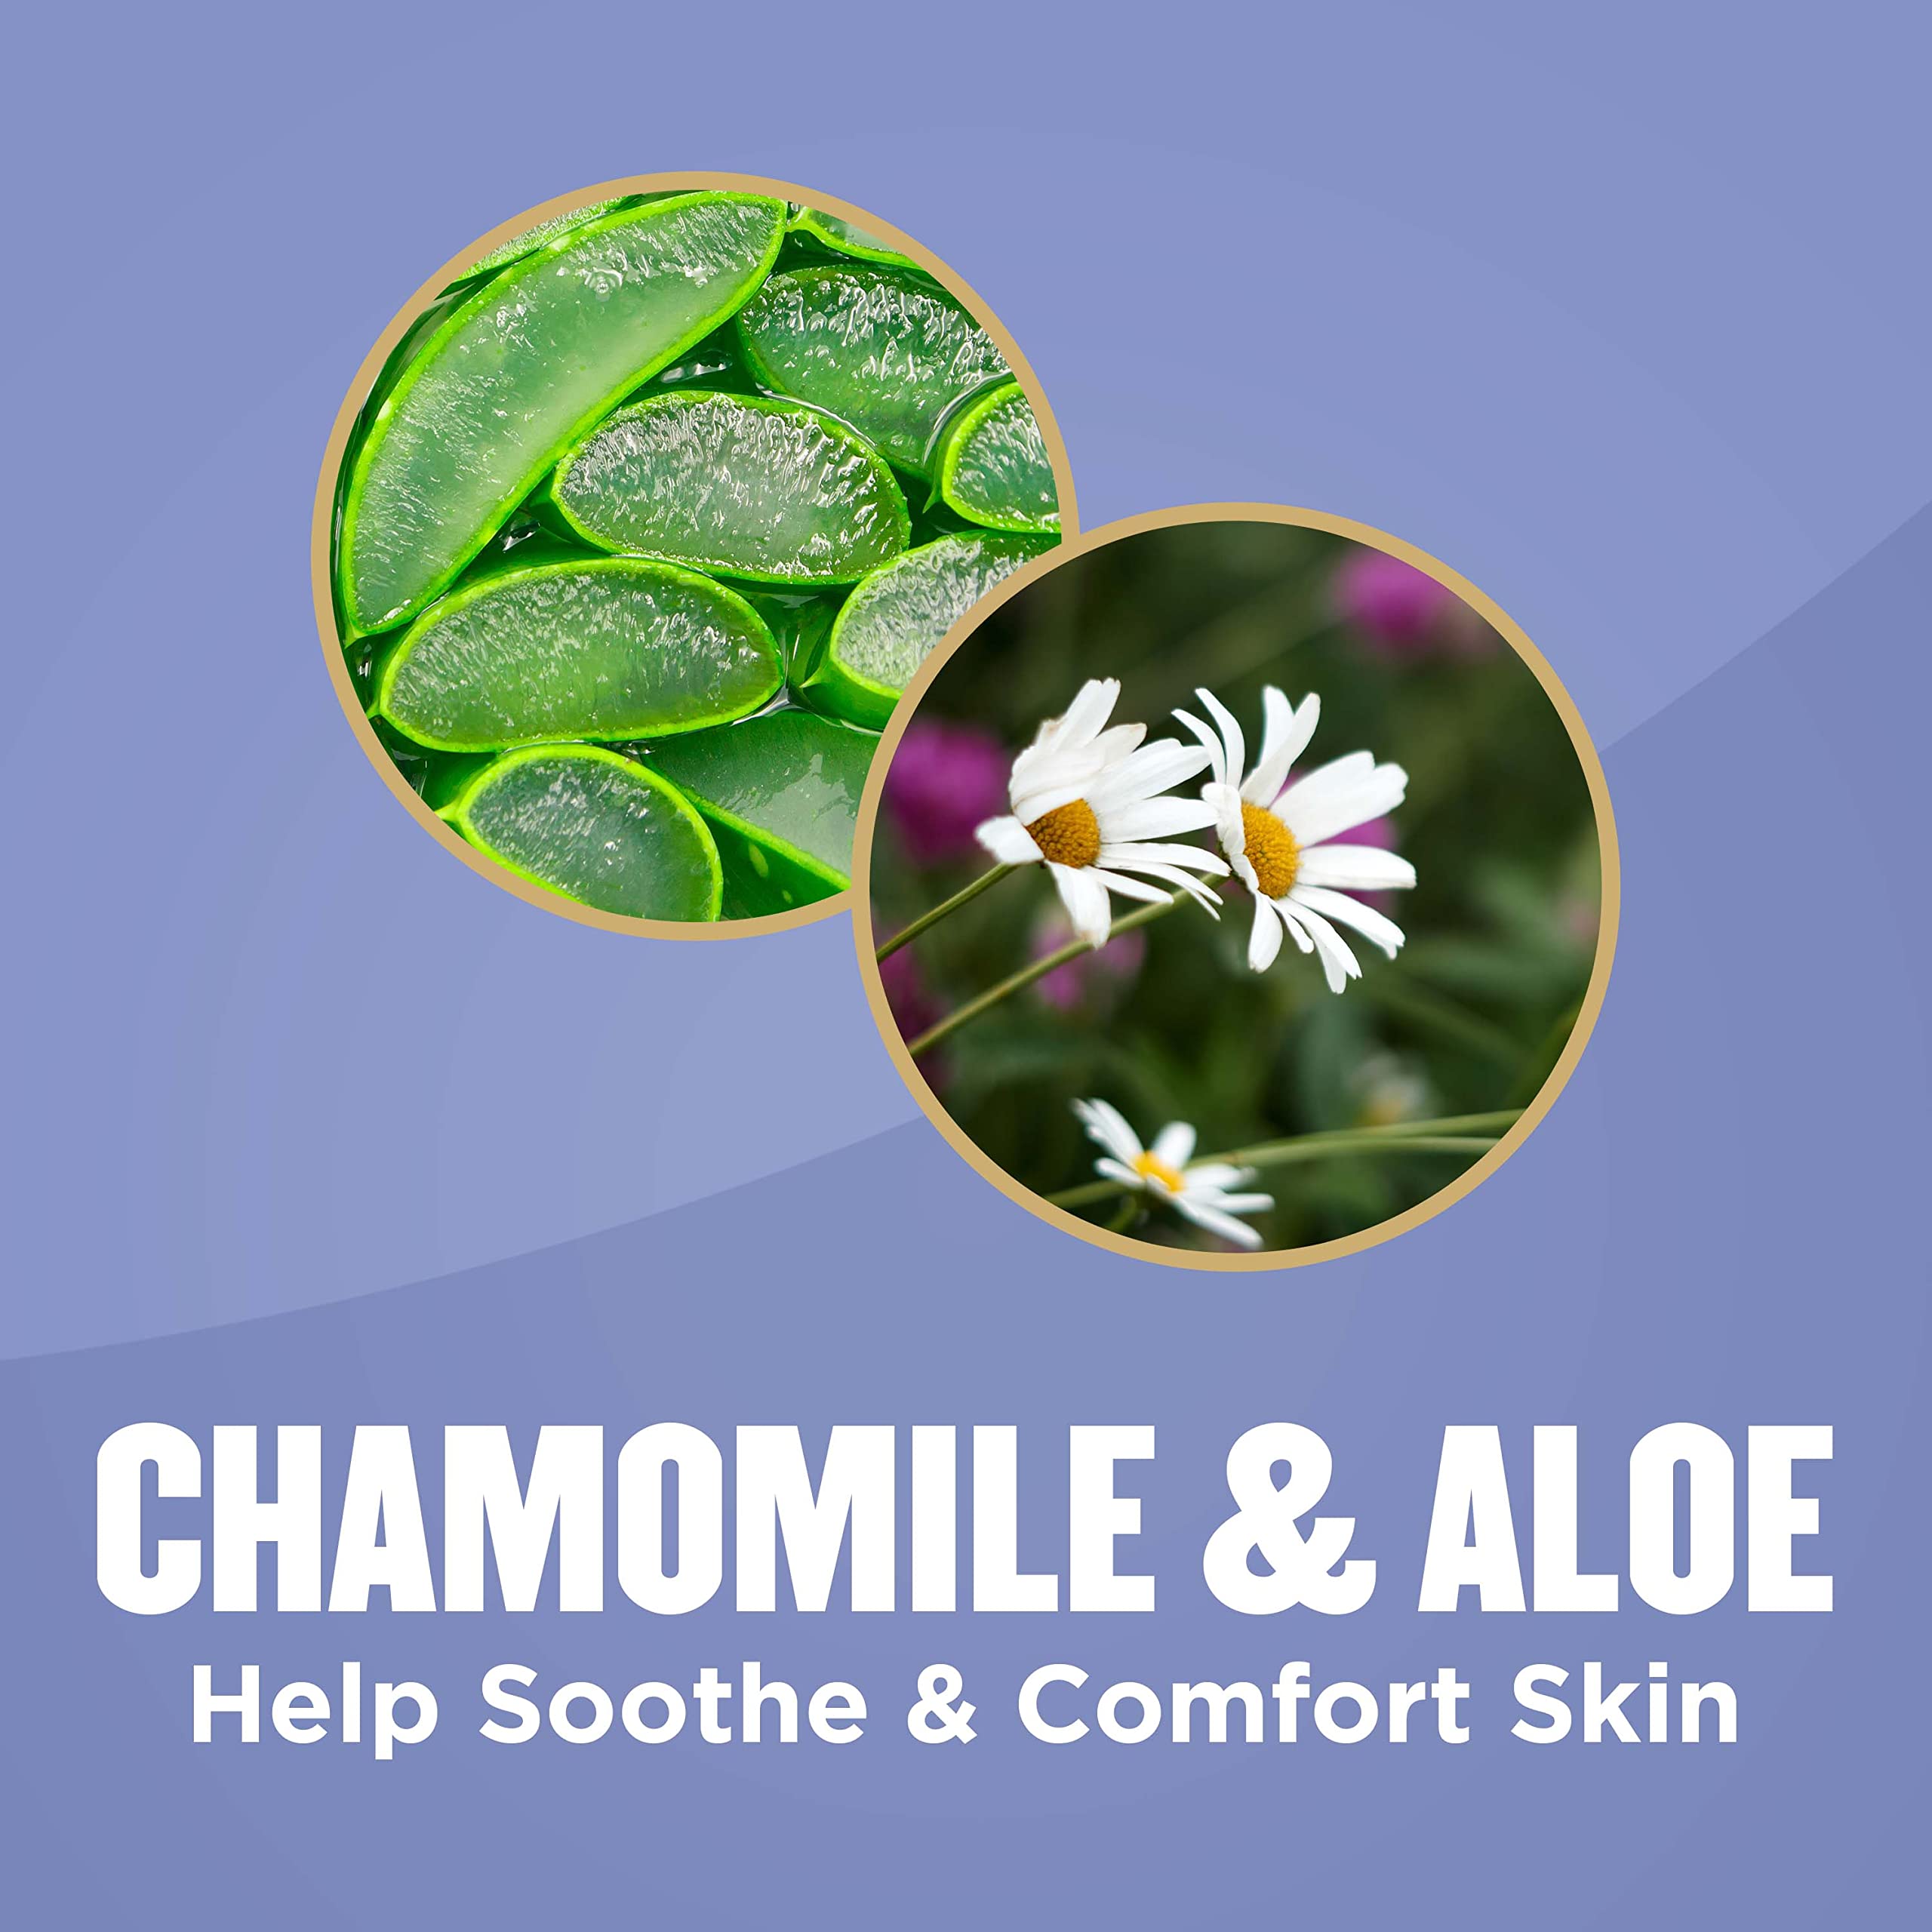 Gold Bond Comfort Body Powder, 10 oz., Talc-Free, Fresh Clean Scent With Aloe & Chamomile